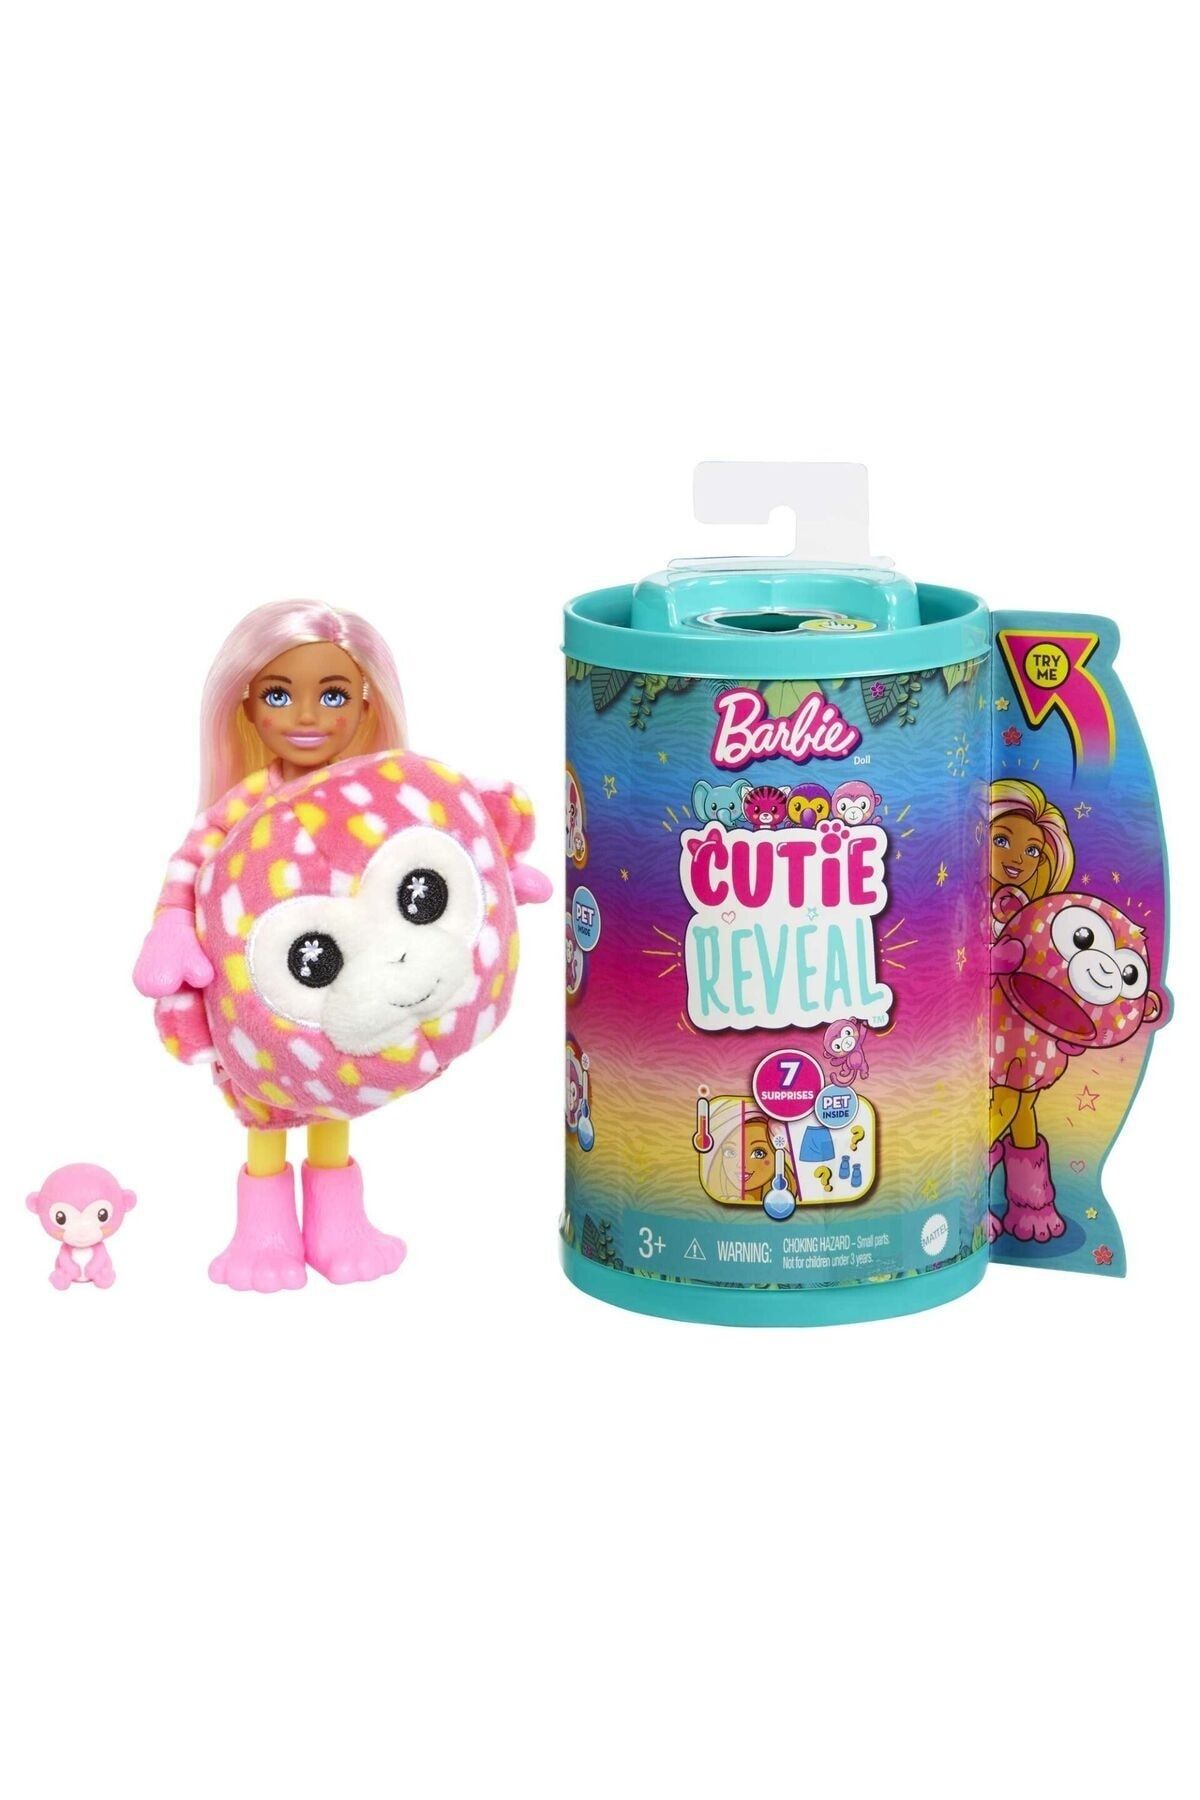 Mattel Barbie Cutie Reveal Bebek Chelsea -Tropikal Orman Serisi Maymun HKR12 HKR14